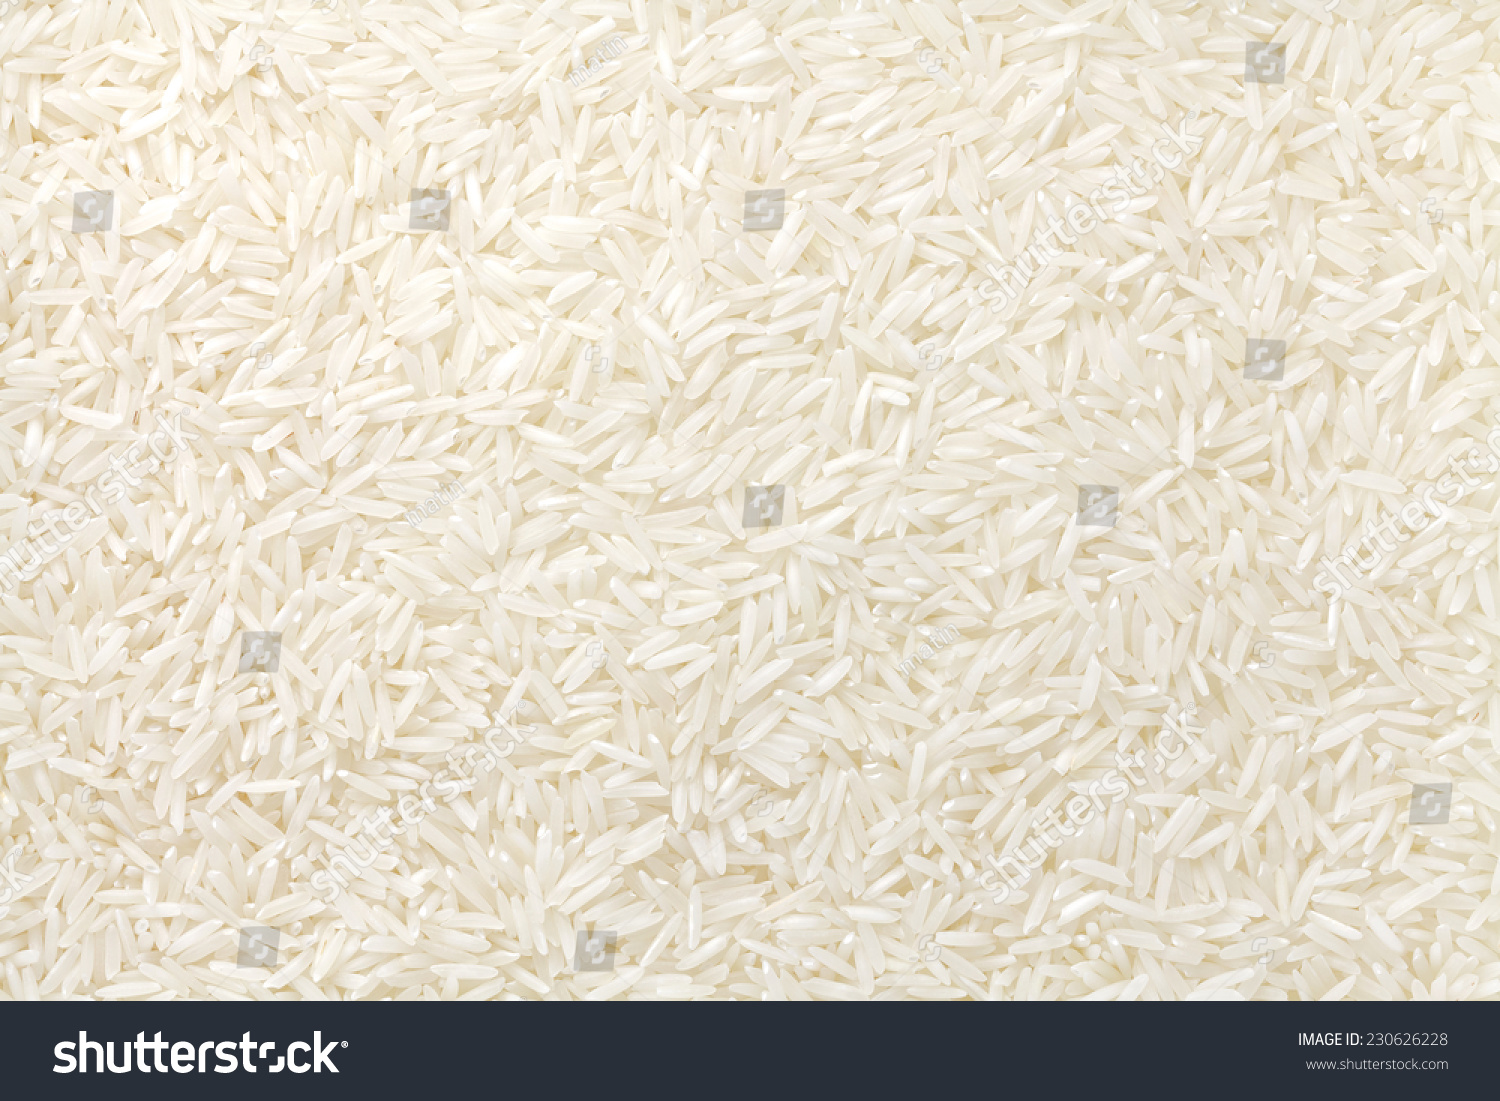 Basmati rice #230626228